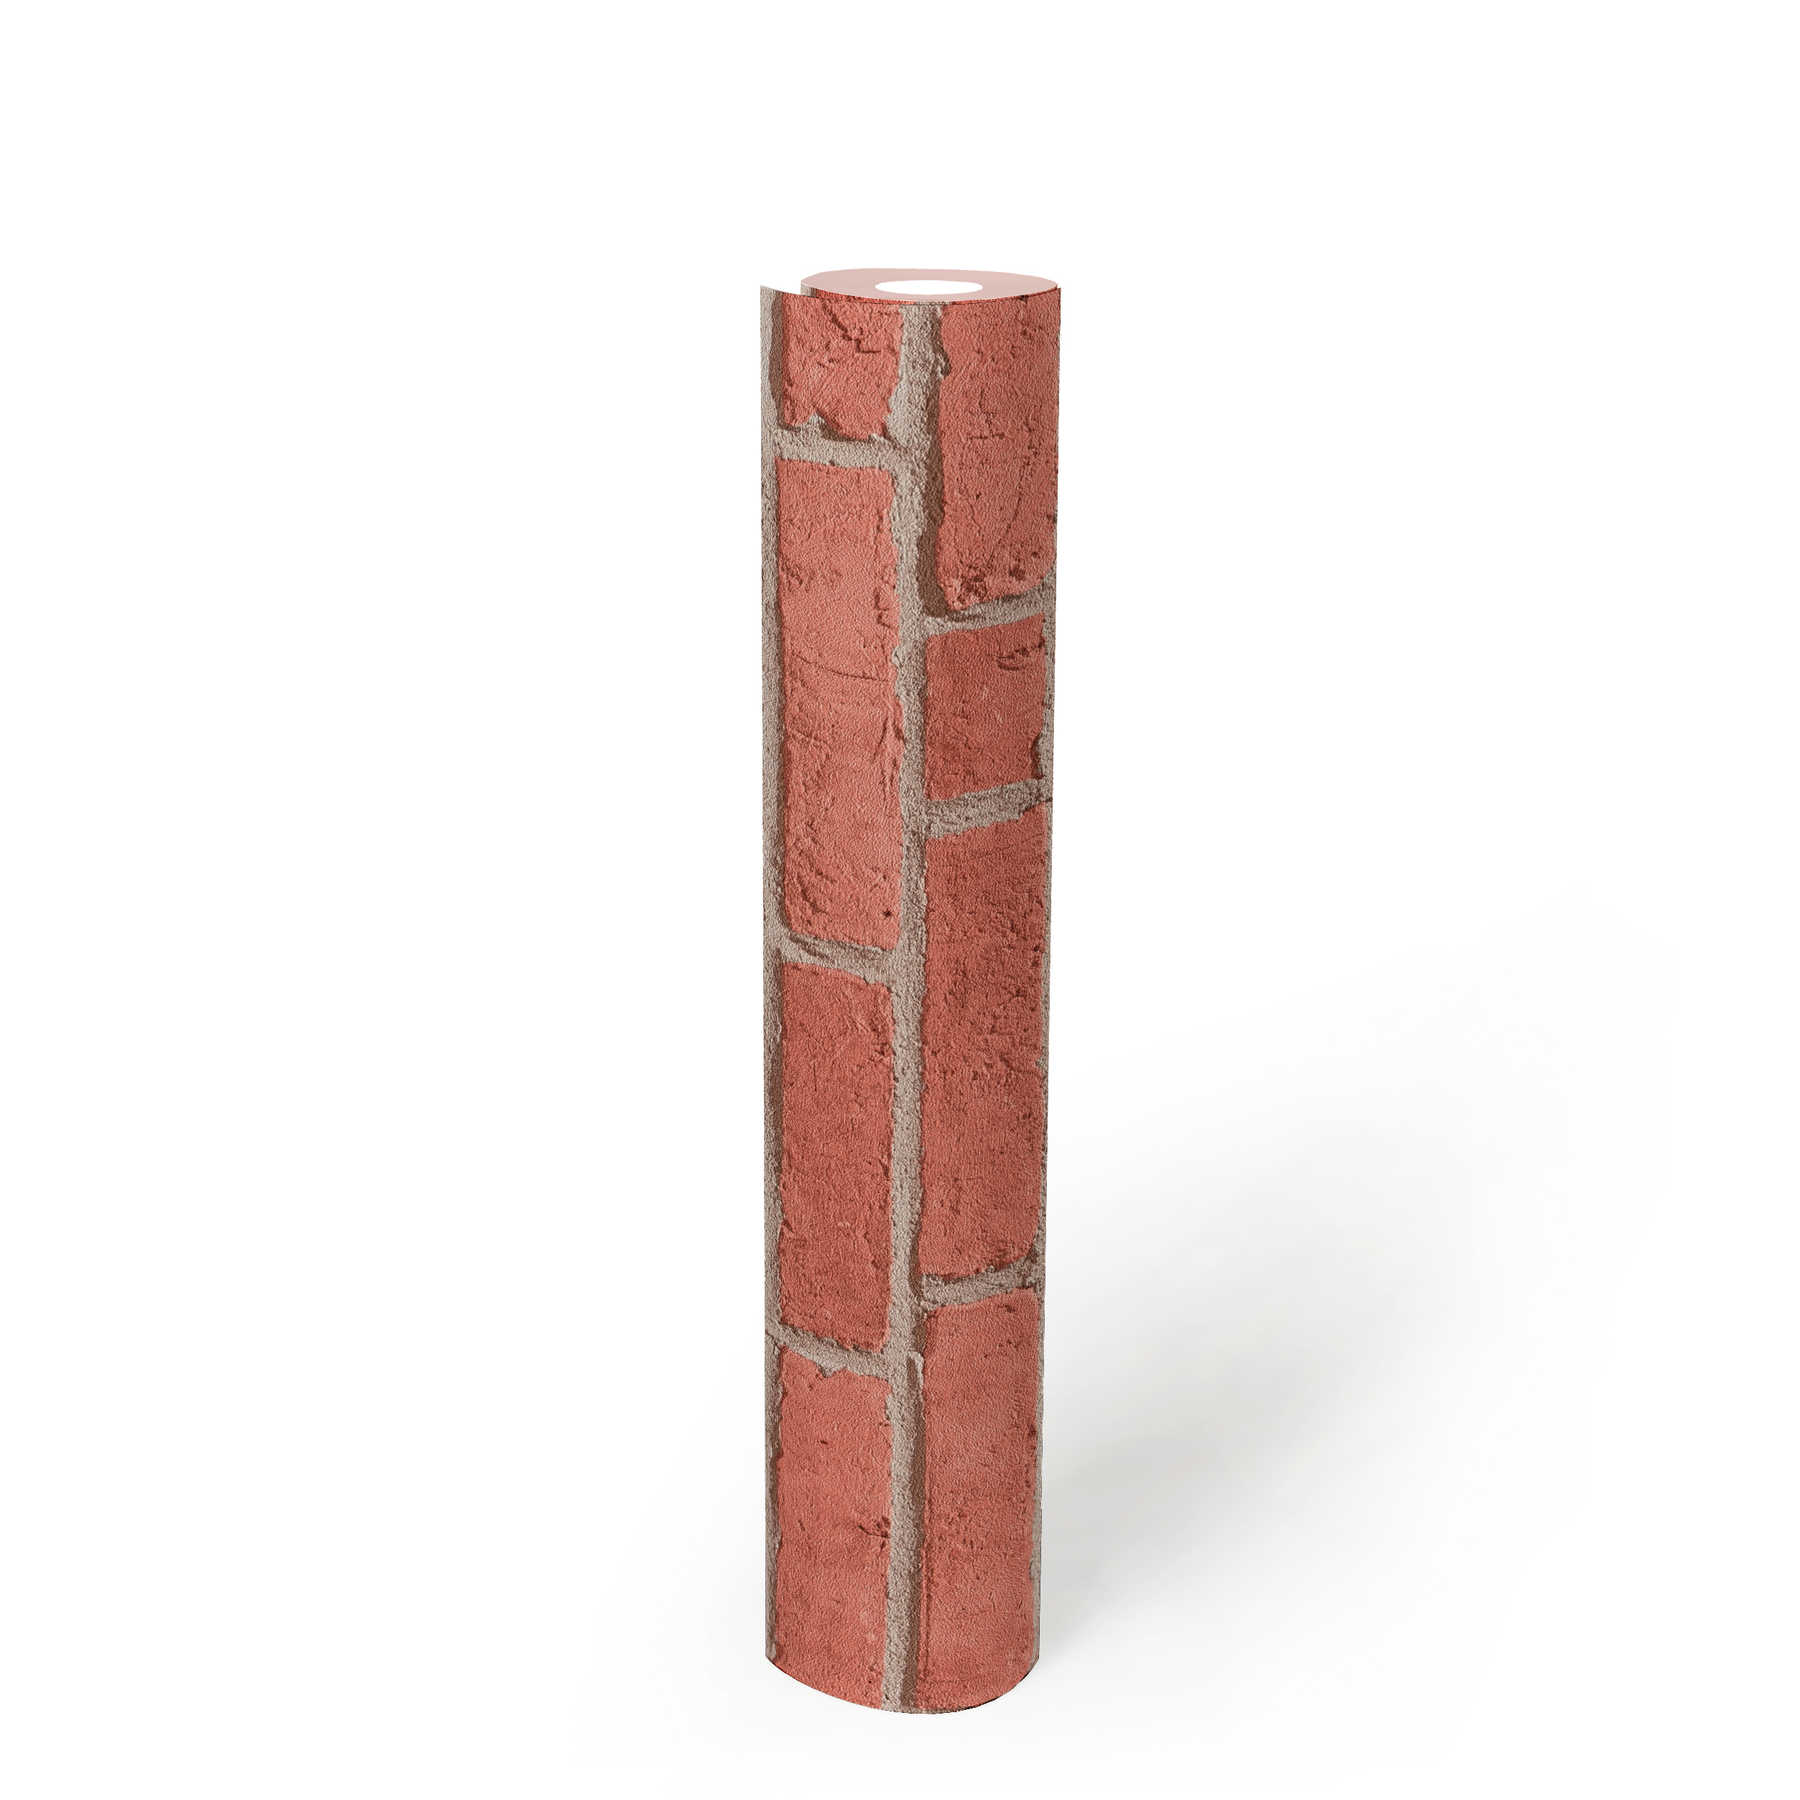             Stone wallpaper classic brick wall design & 3D effect - red, beige
        